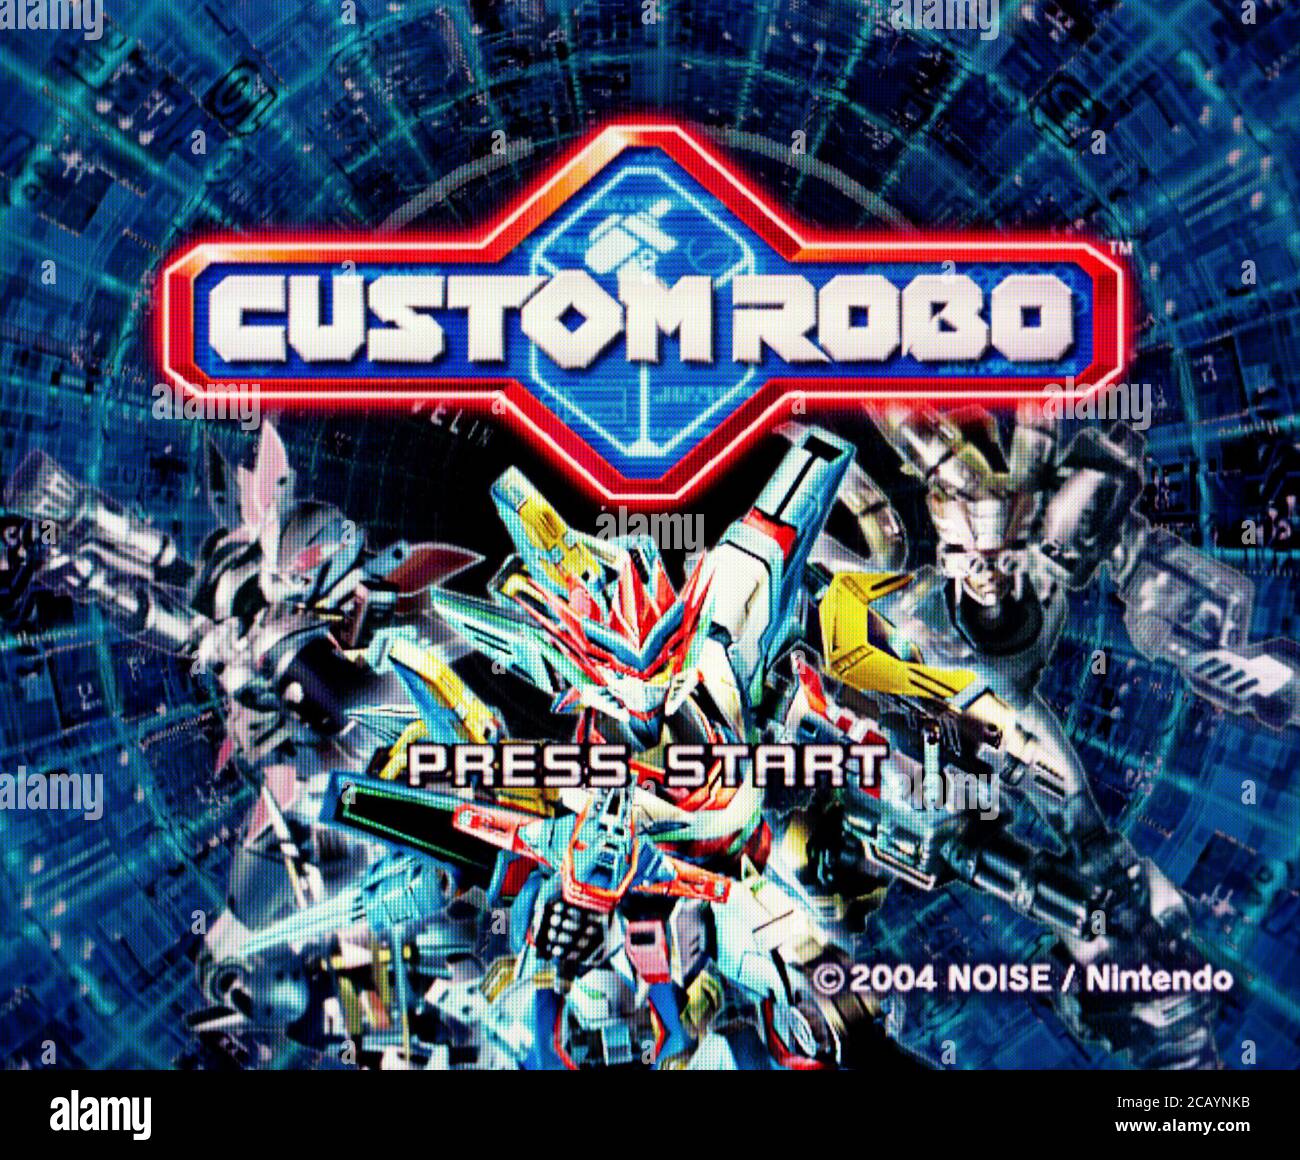 Custom Robo - Nintendo Gamecube Videogame - Editorial use only Stock Photo  - Alamy